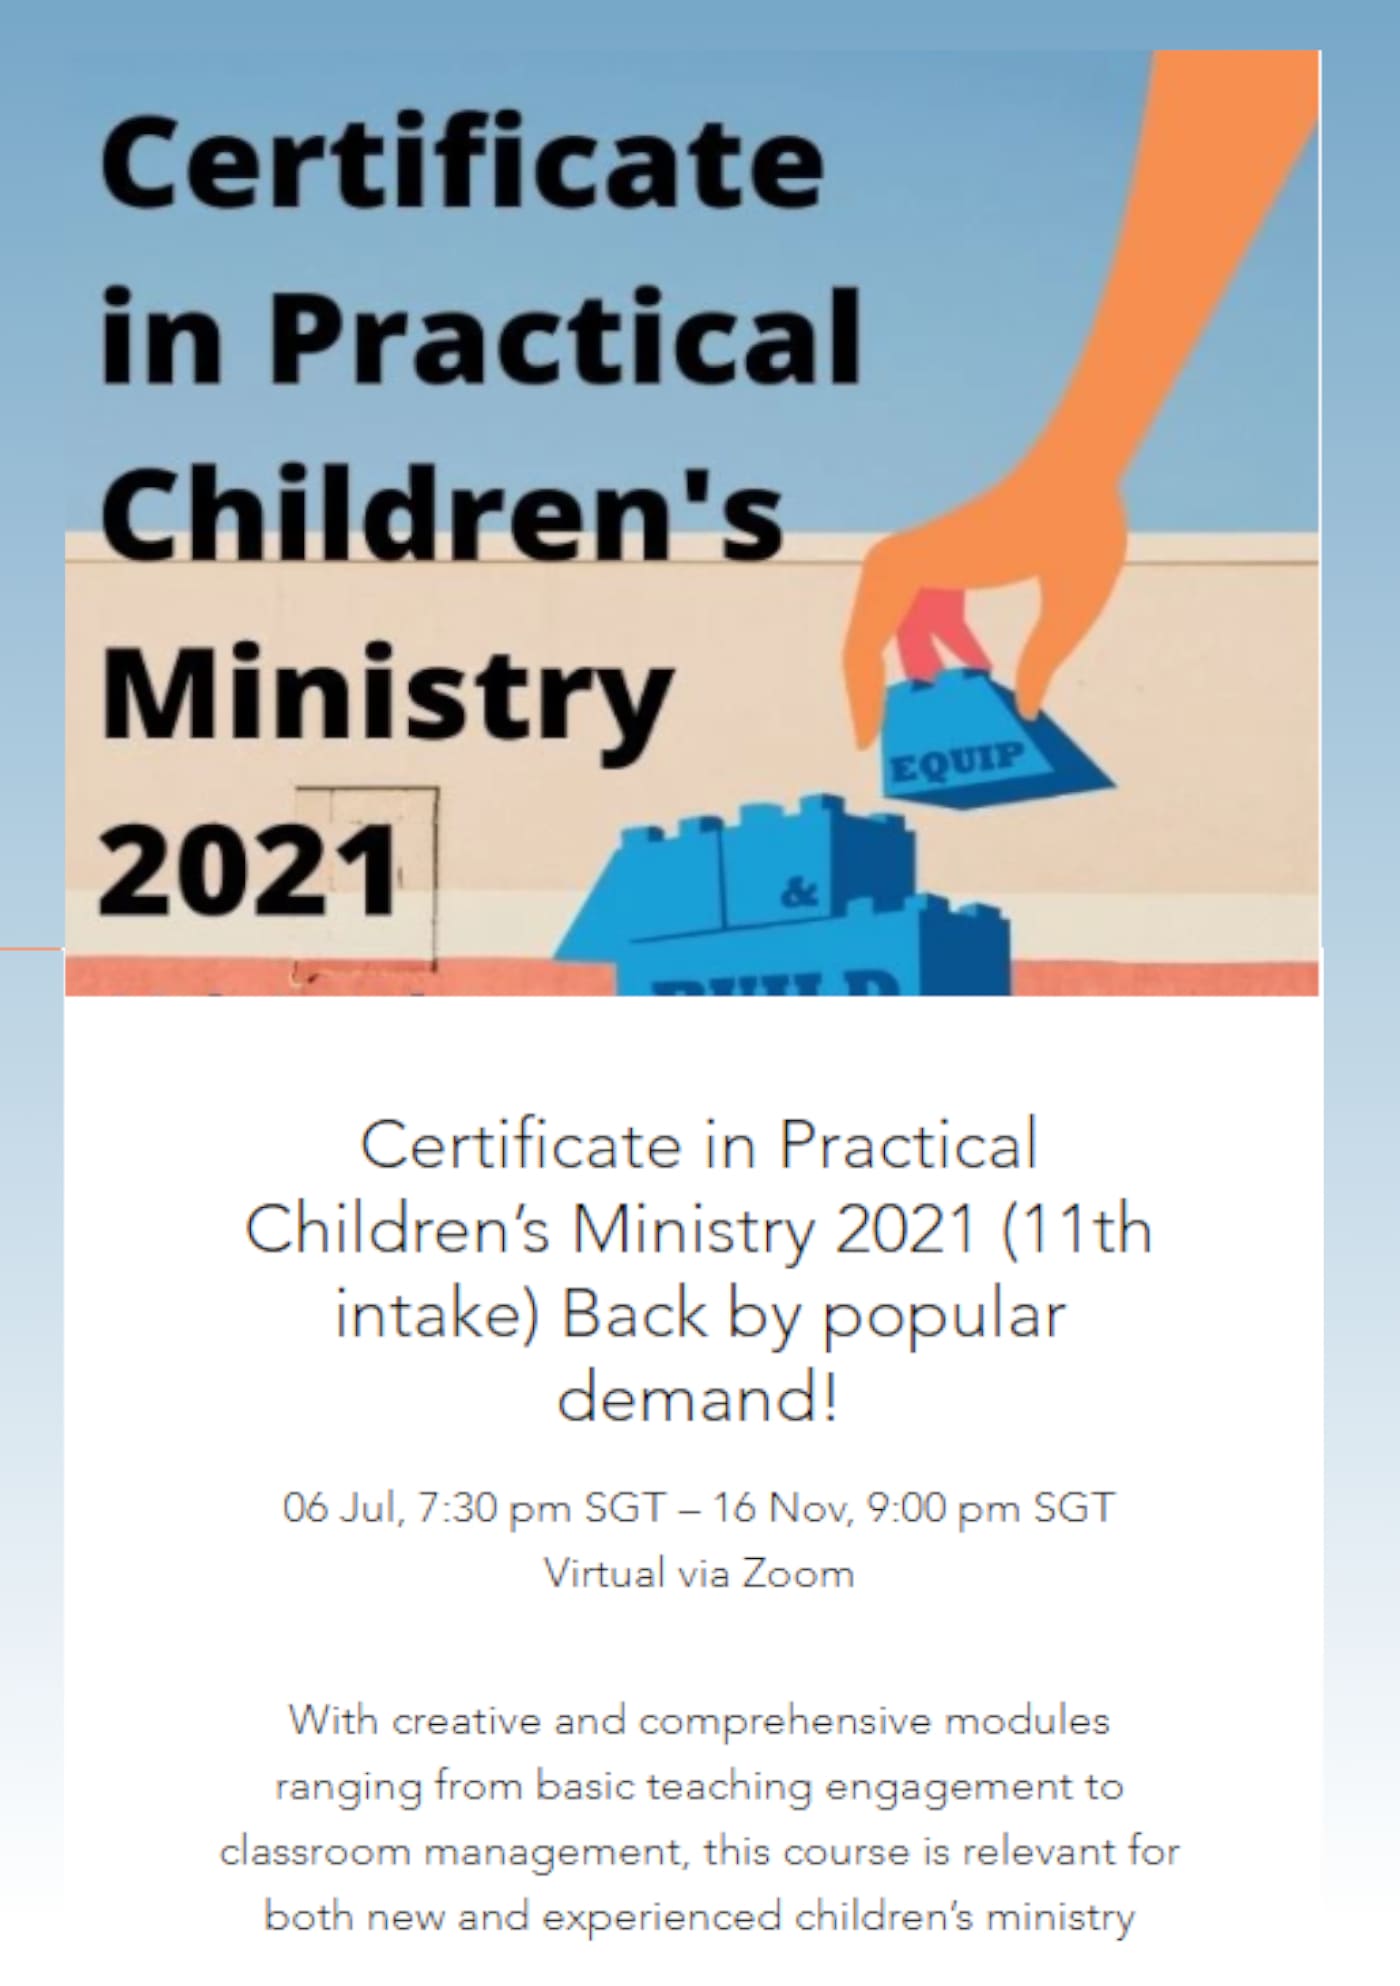 Certificate in Practical Children’s Ministry 2021: July 6 – November 16